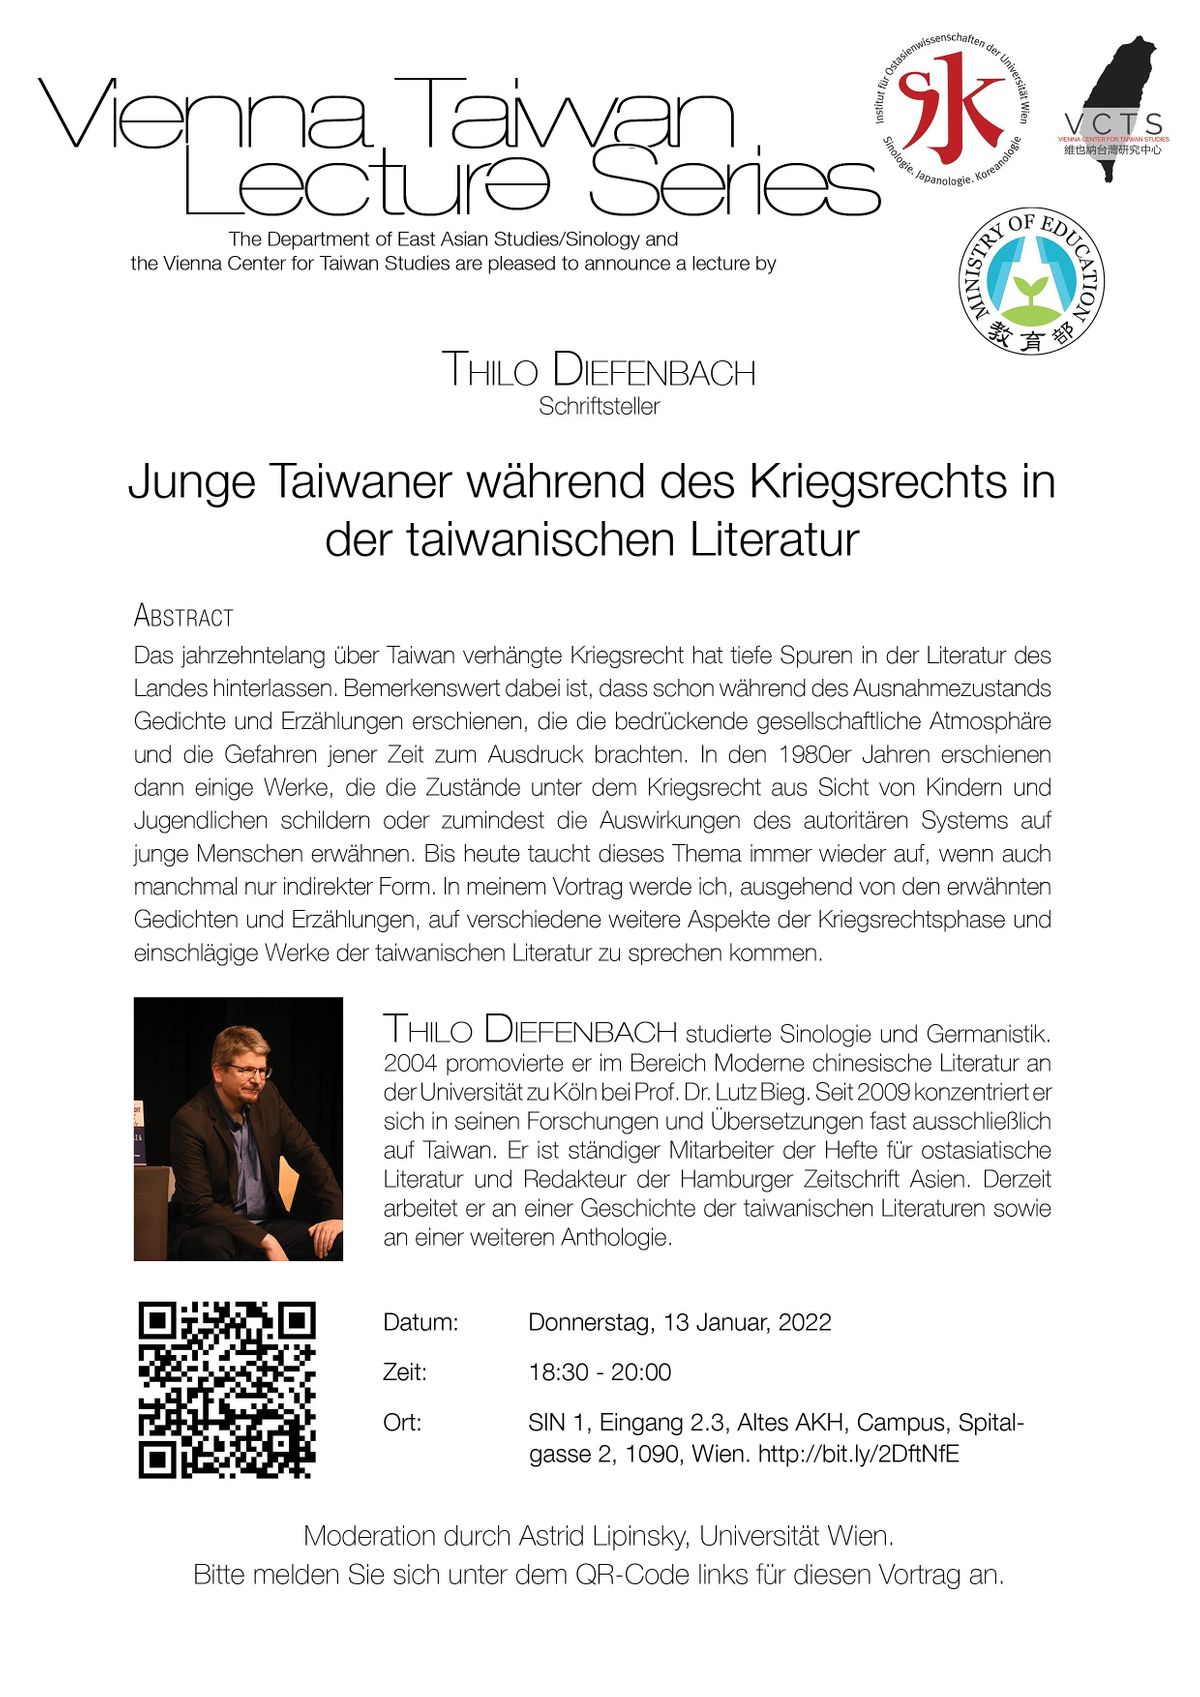 Vortrag Thilo Diefenbach